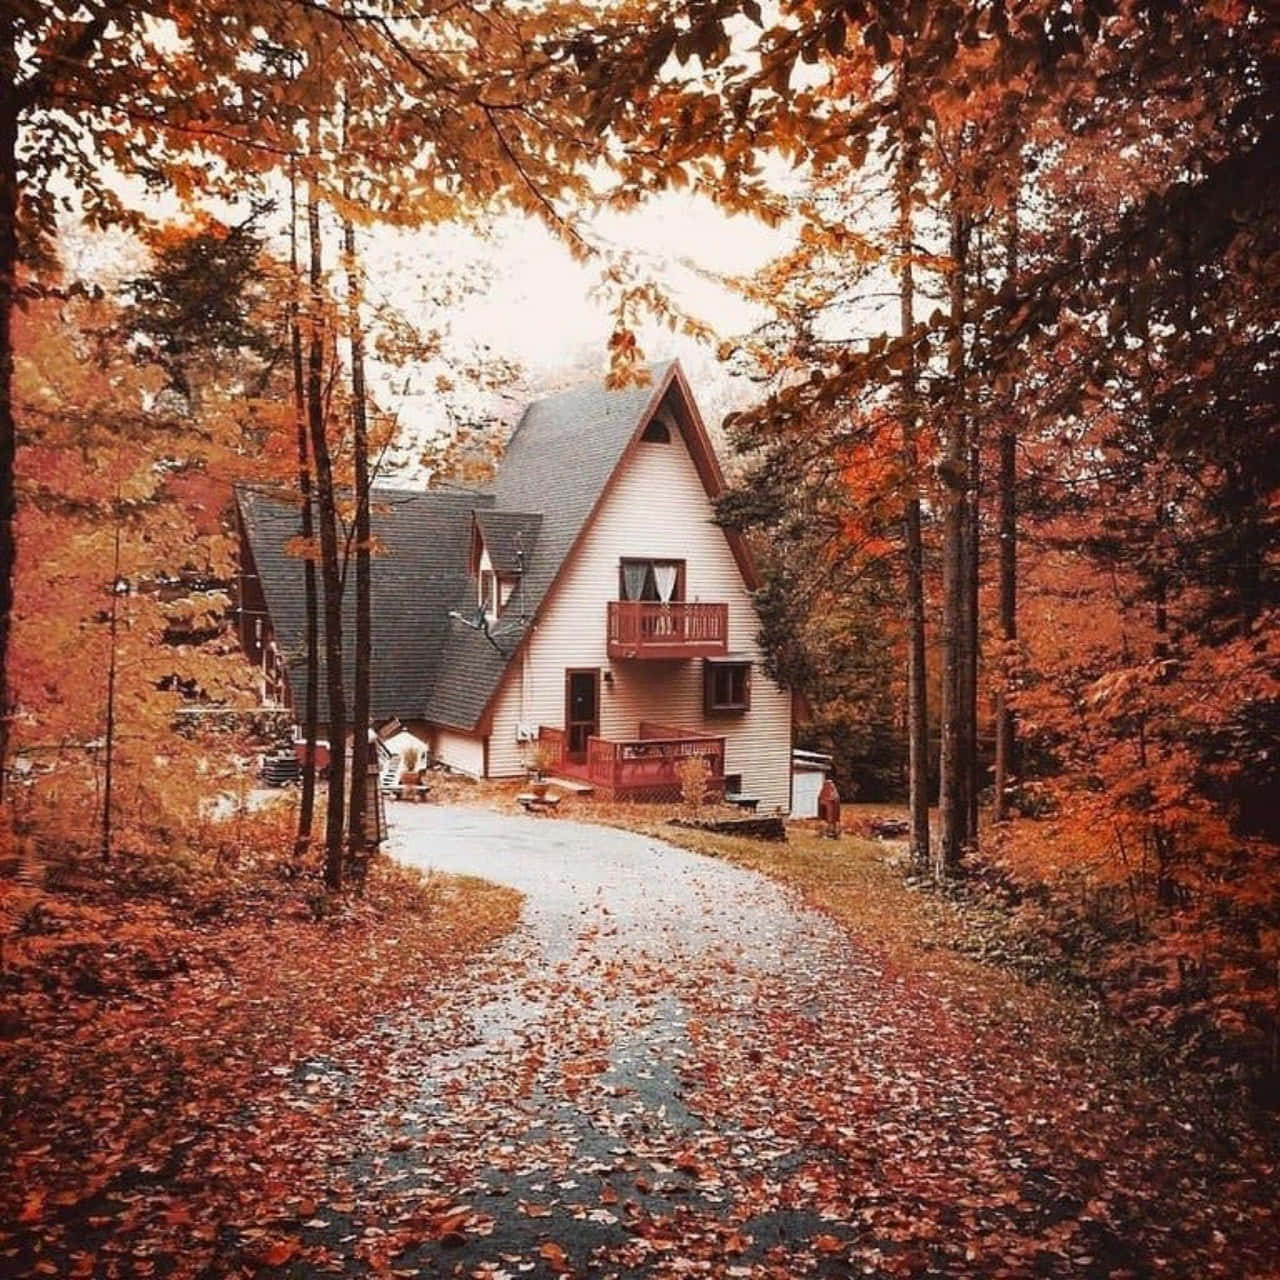 Cozy Autumn Aesthetic Cabin House Wallpaper